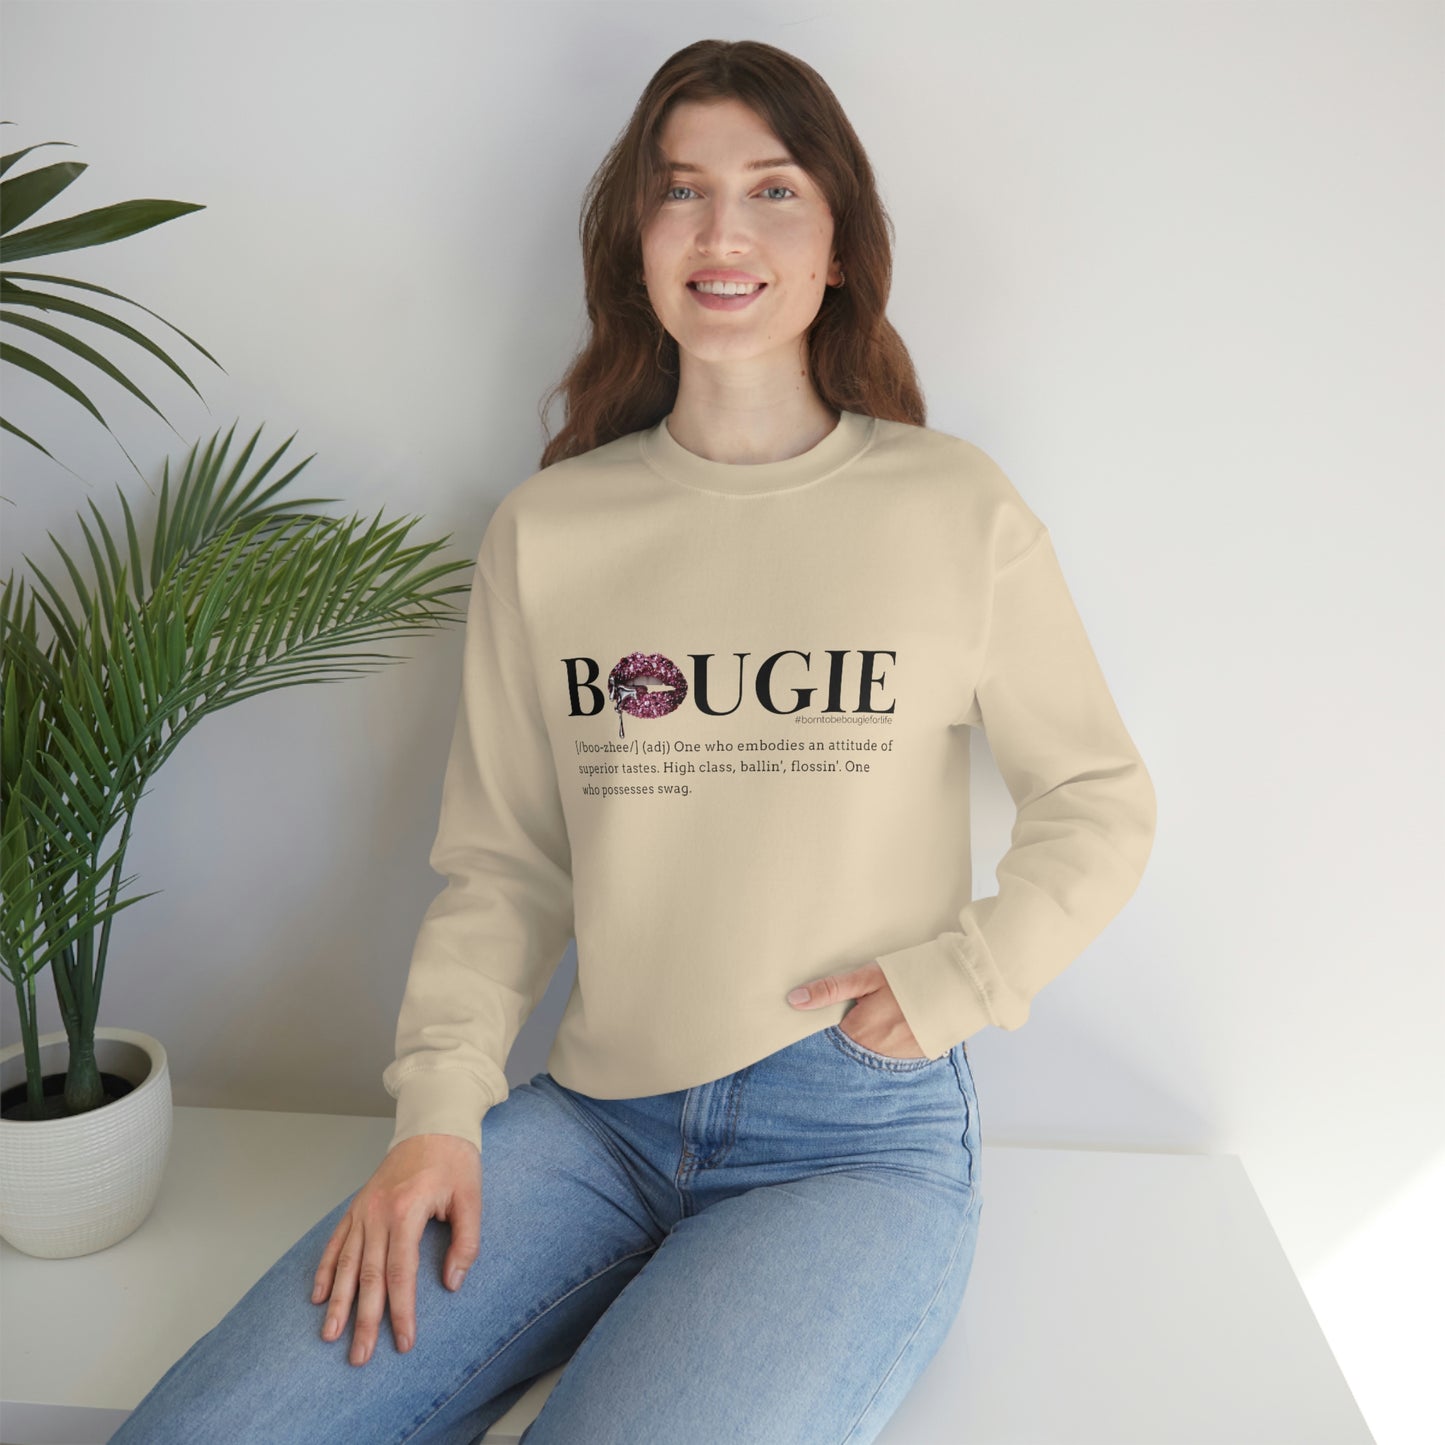 Bougie Definition Sweatshirt